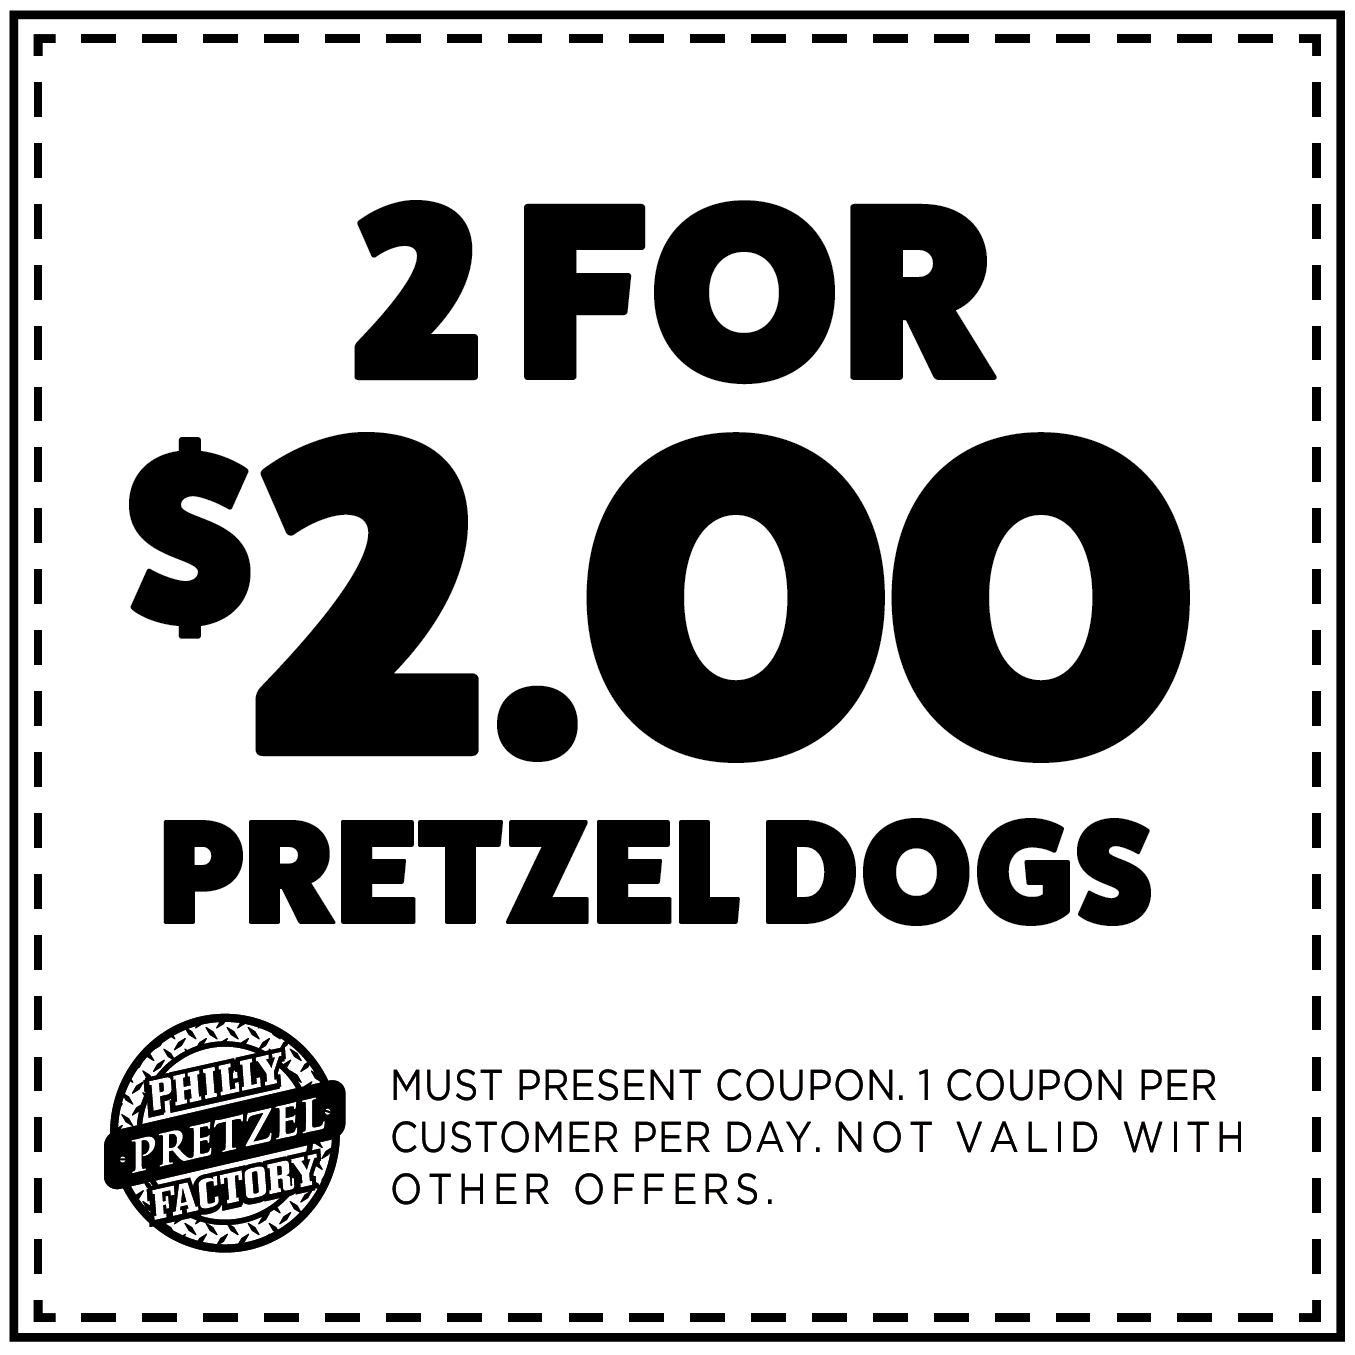 2 for $2 Pretzel Dogs